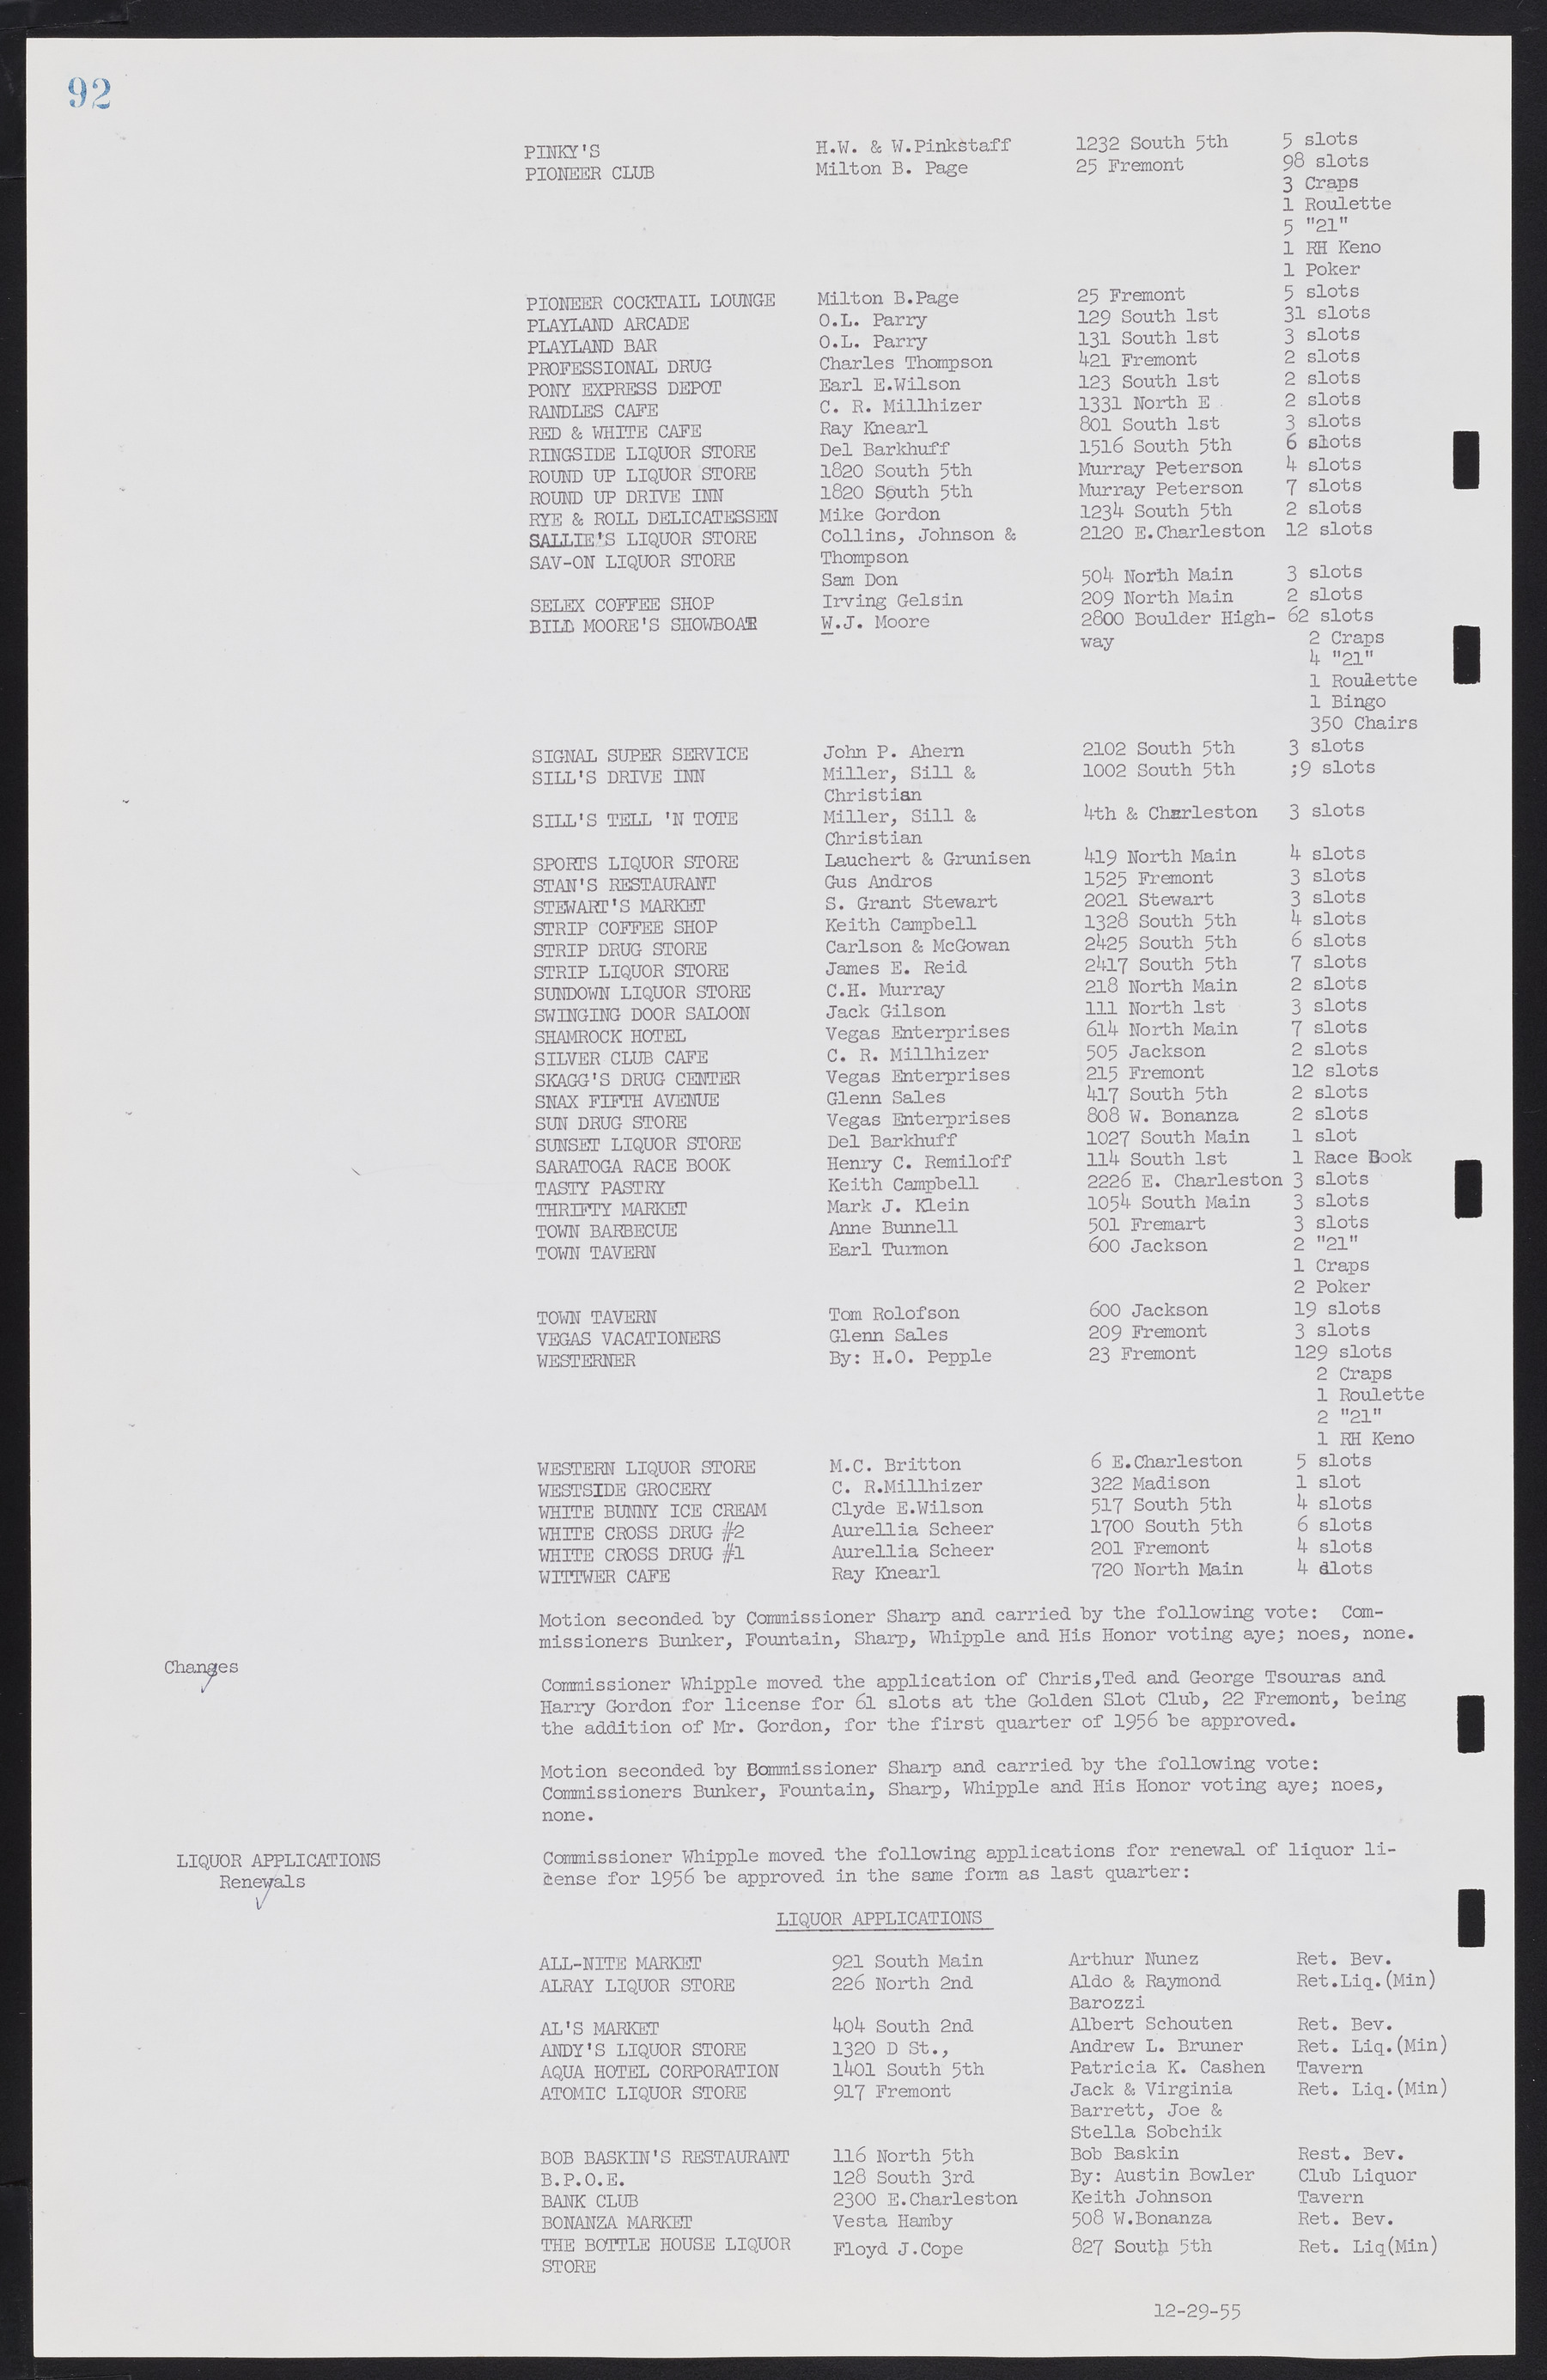 Las Vegas City Commission Minutes, September 21, 1955 to November 20, 1957, lvc000010-102